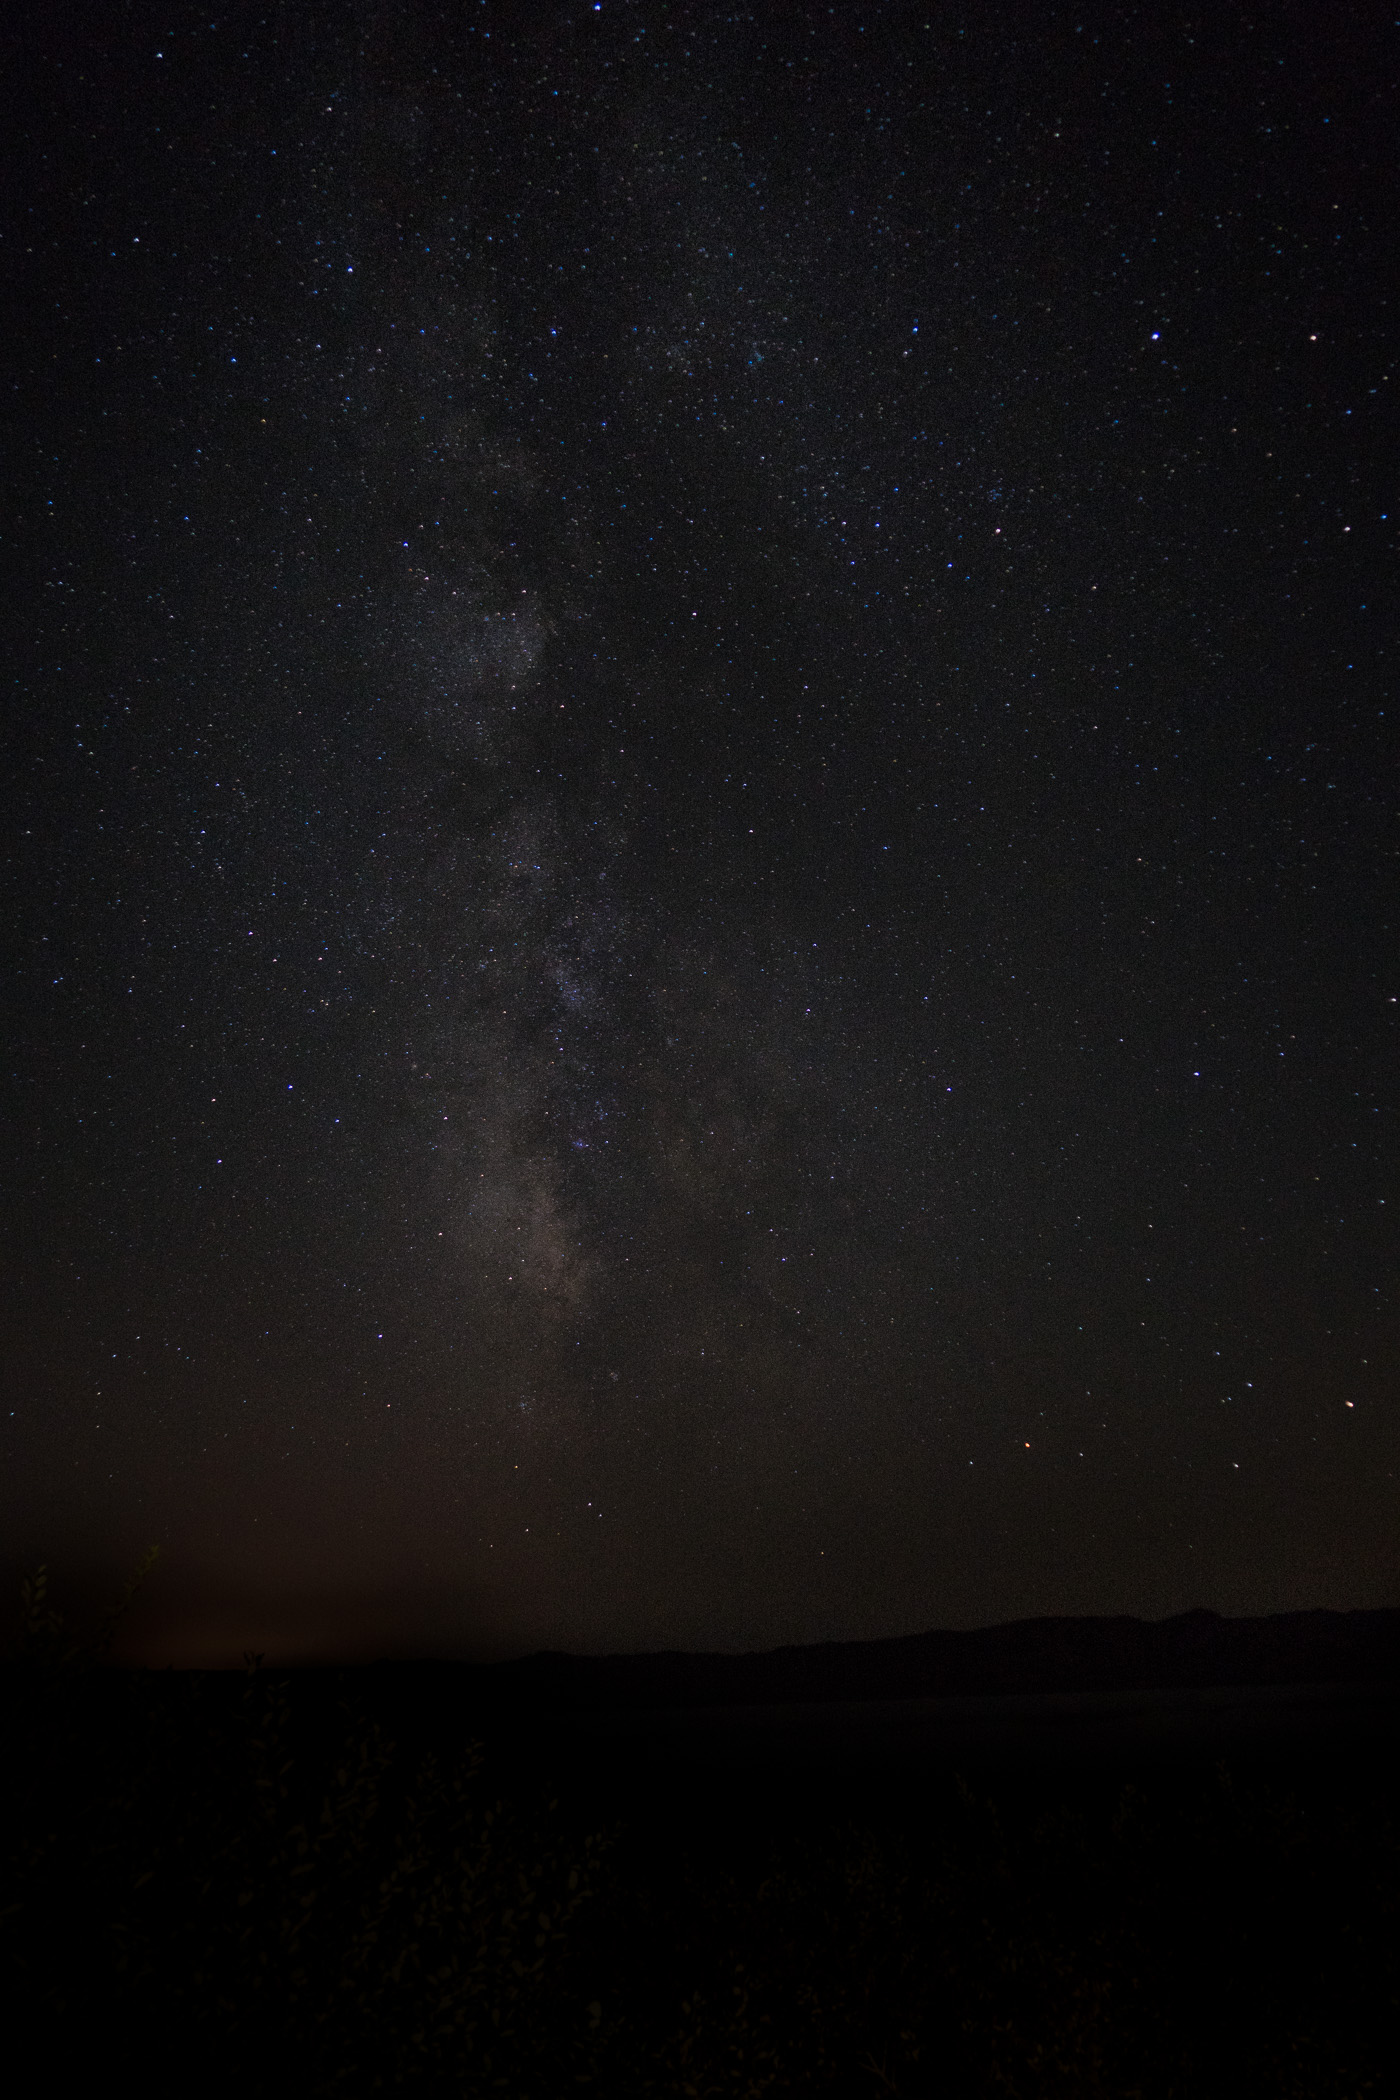 Milky Way as seen from Mendocino County, California